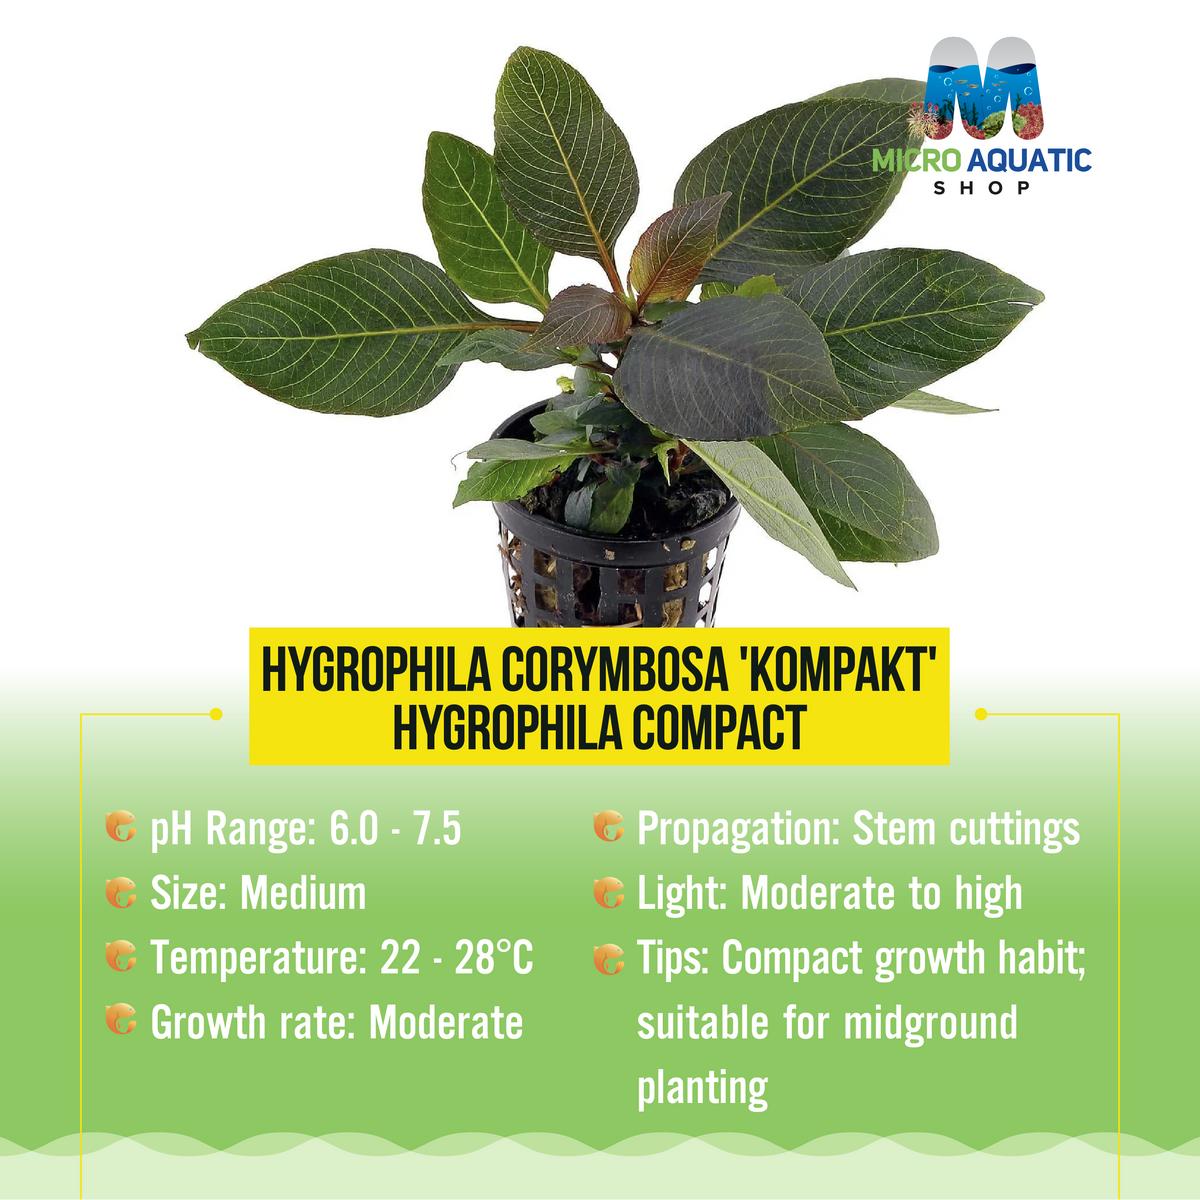 Hygrophila Corymbosa 'Kompakt' - Hygrophila compact